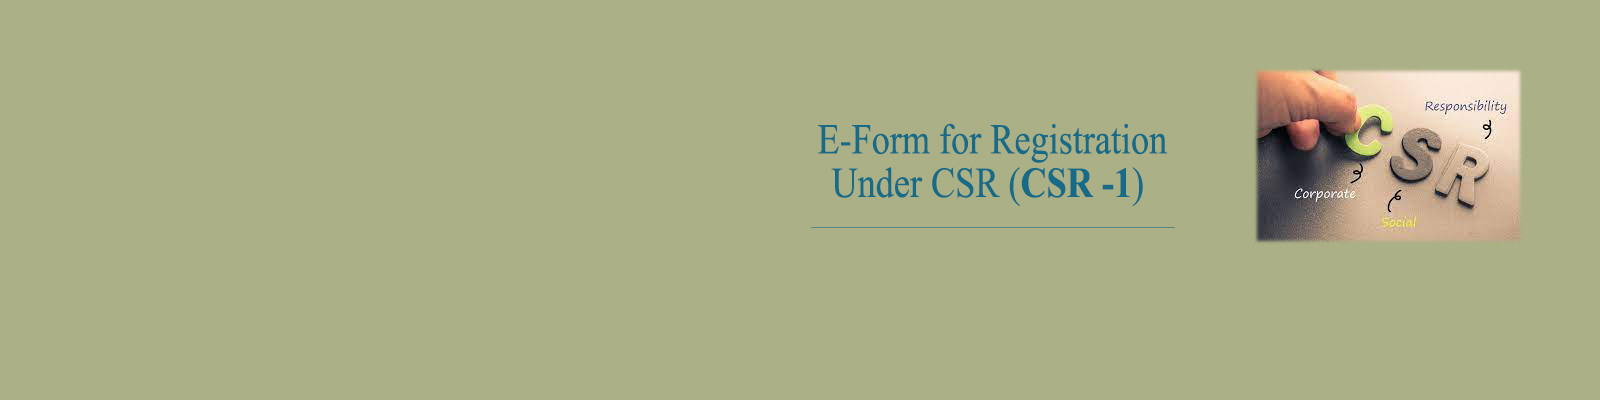 E-form for Registration under CSR (CSR-1)